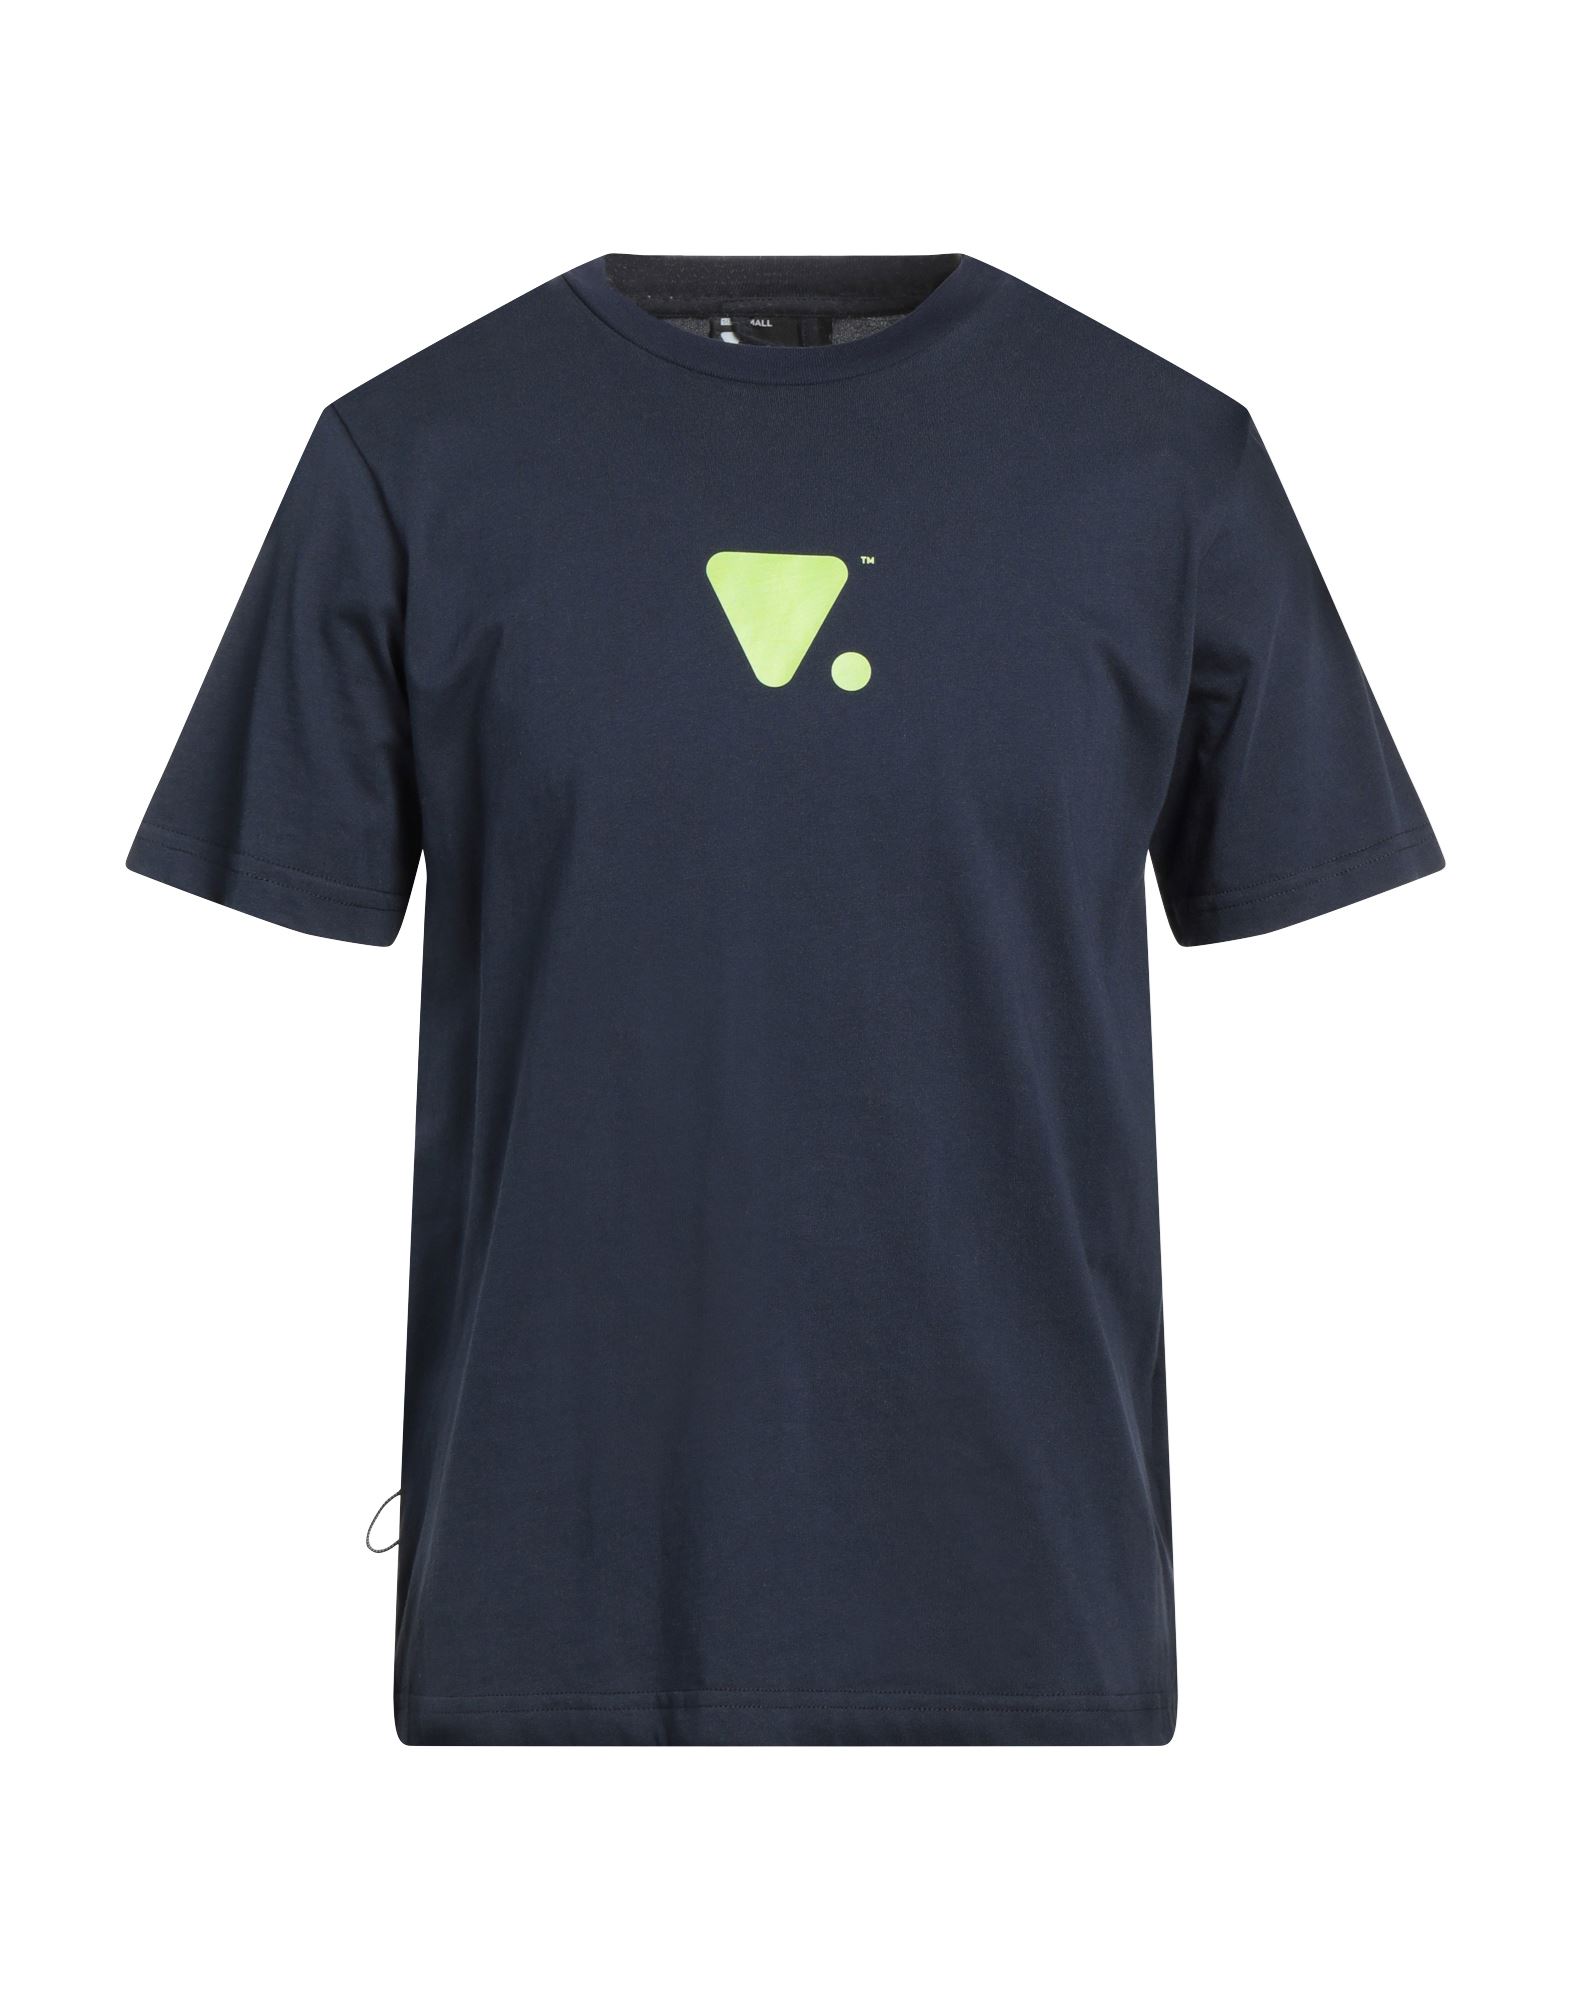 Valvola. T-shirts In Midnight Blue